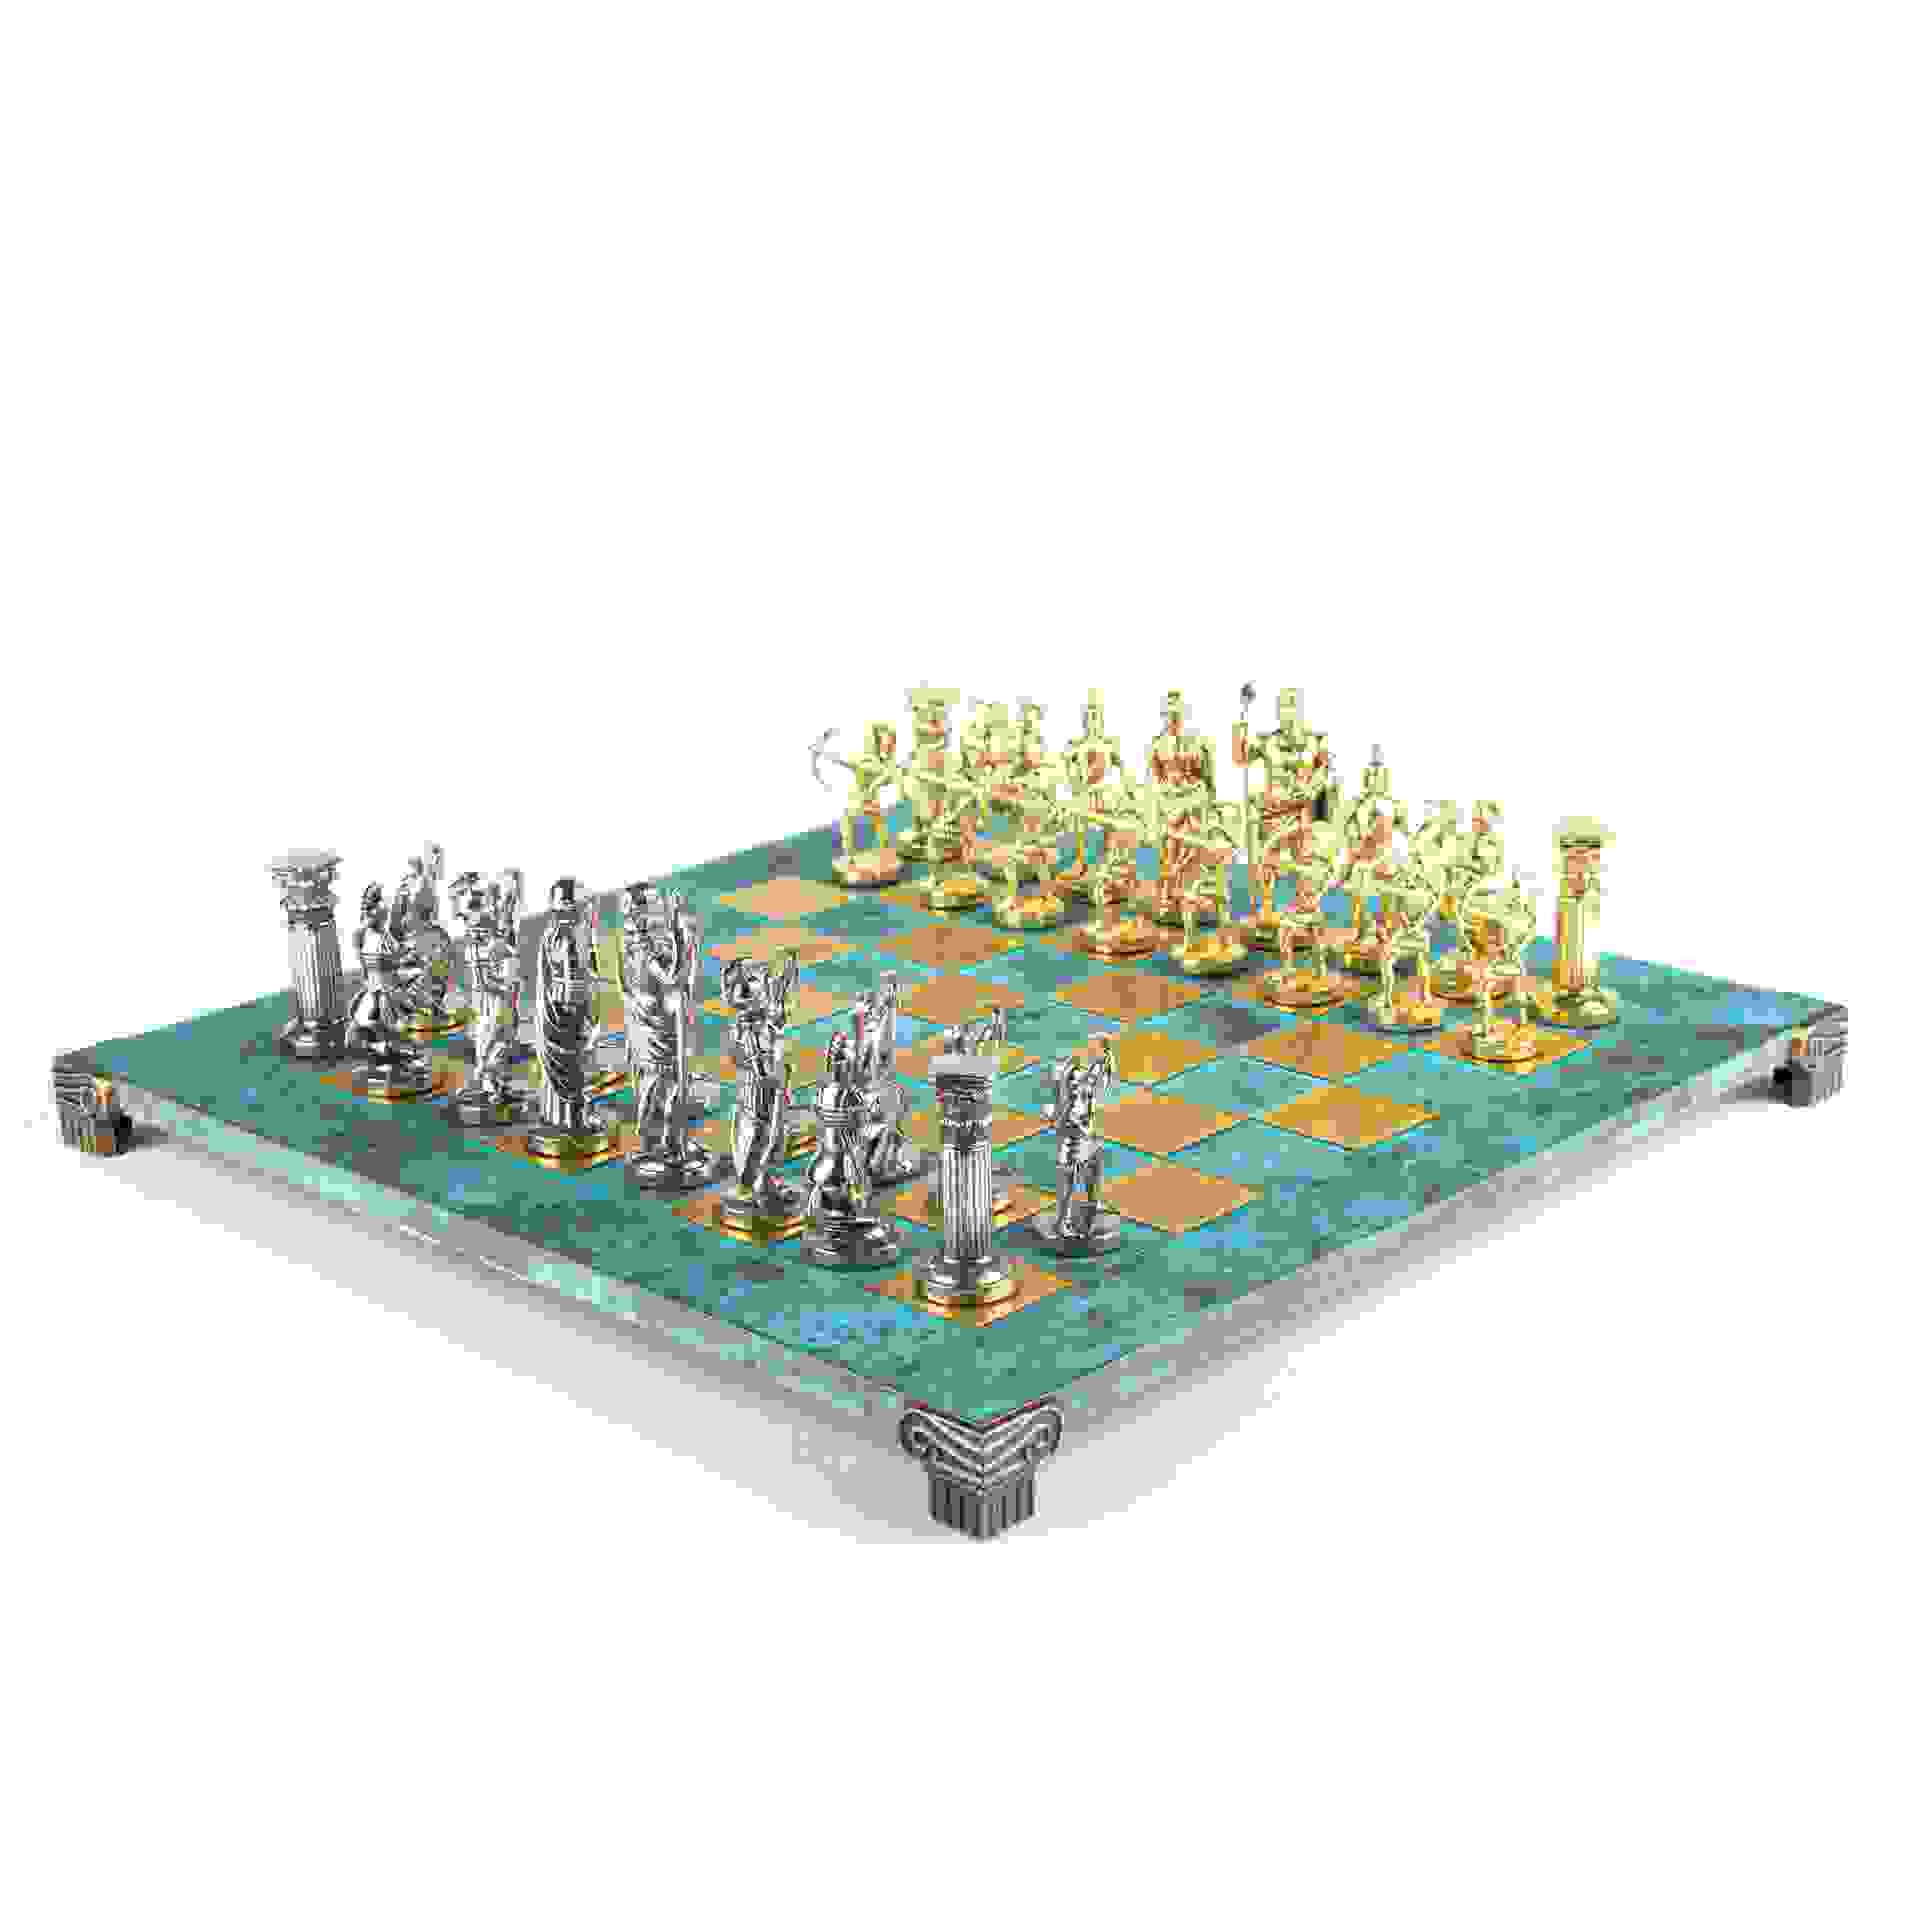 Archers Metal Chess Set 28x28cm Turquoise Patina